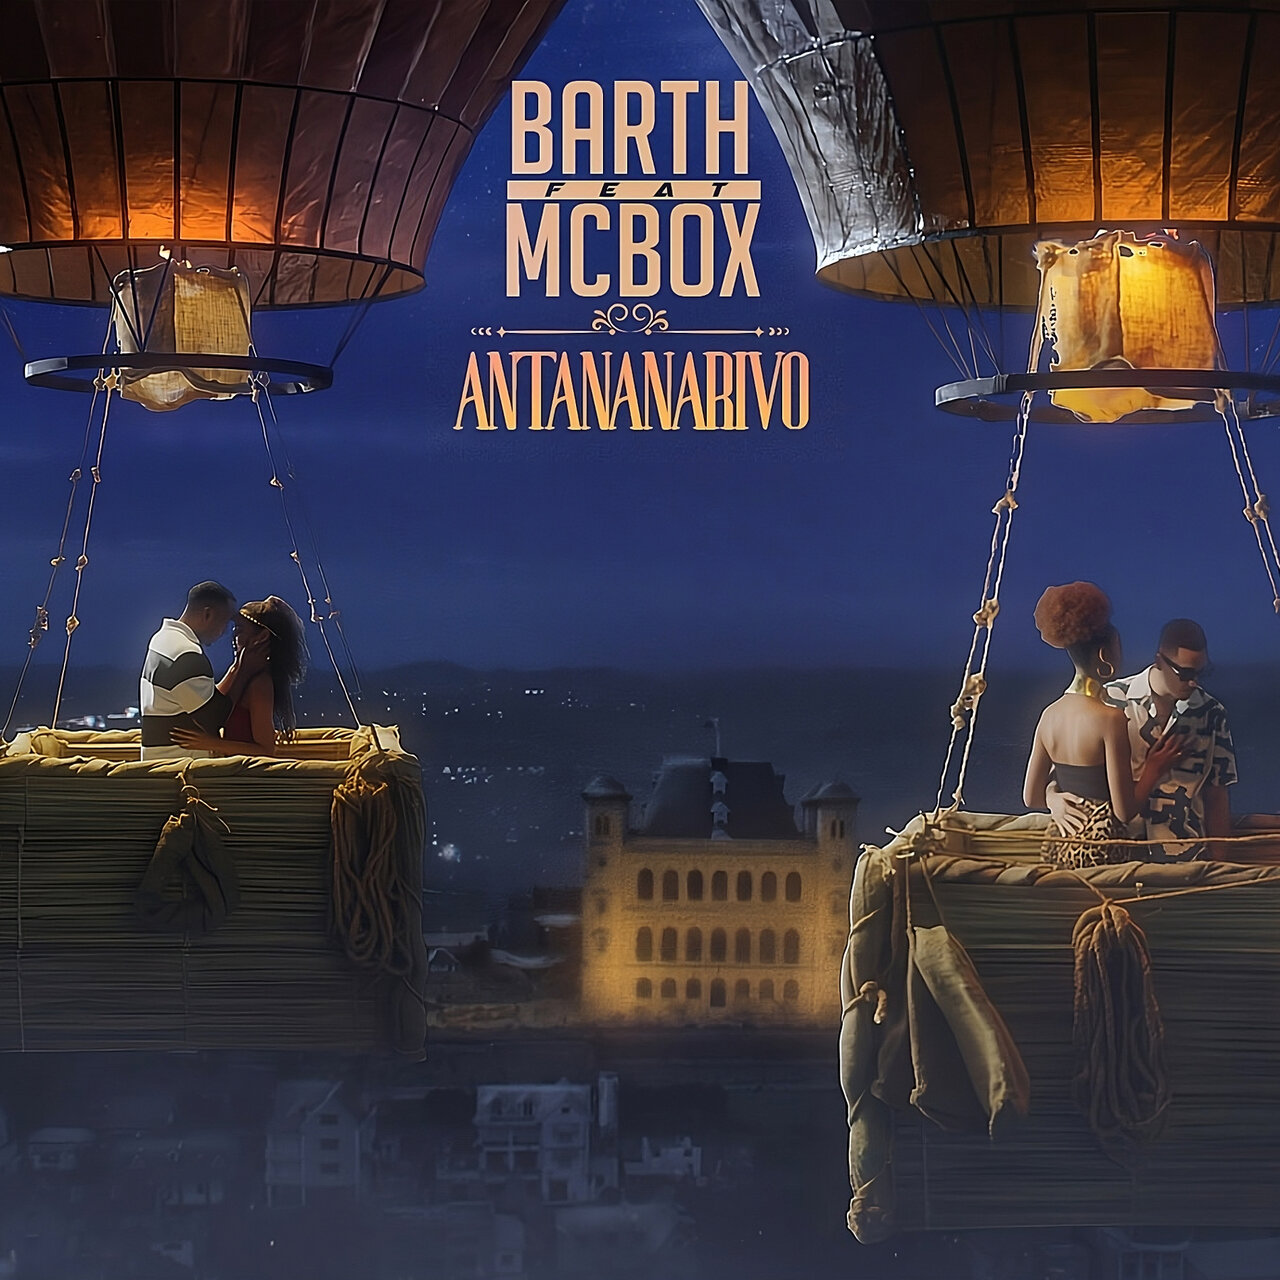 Barth - Antananarivo (ft. MC Box) (Cover)